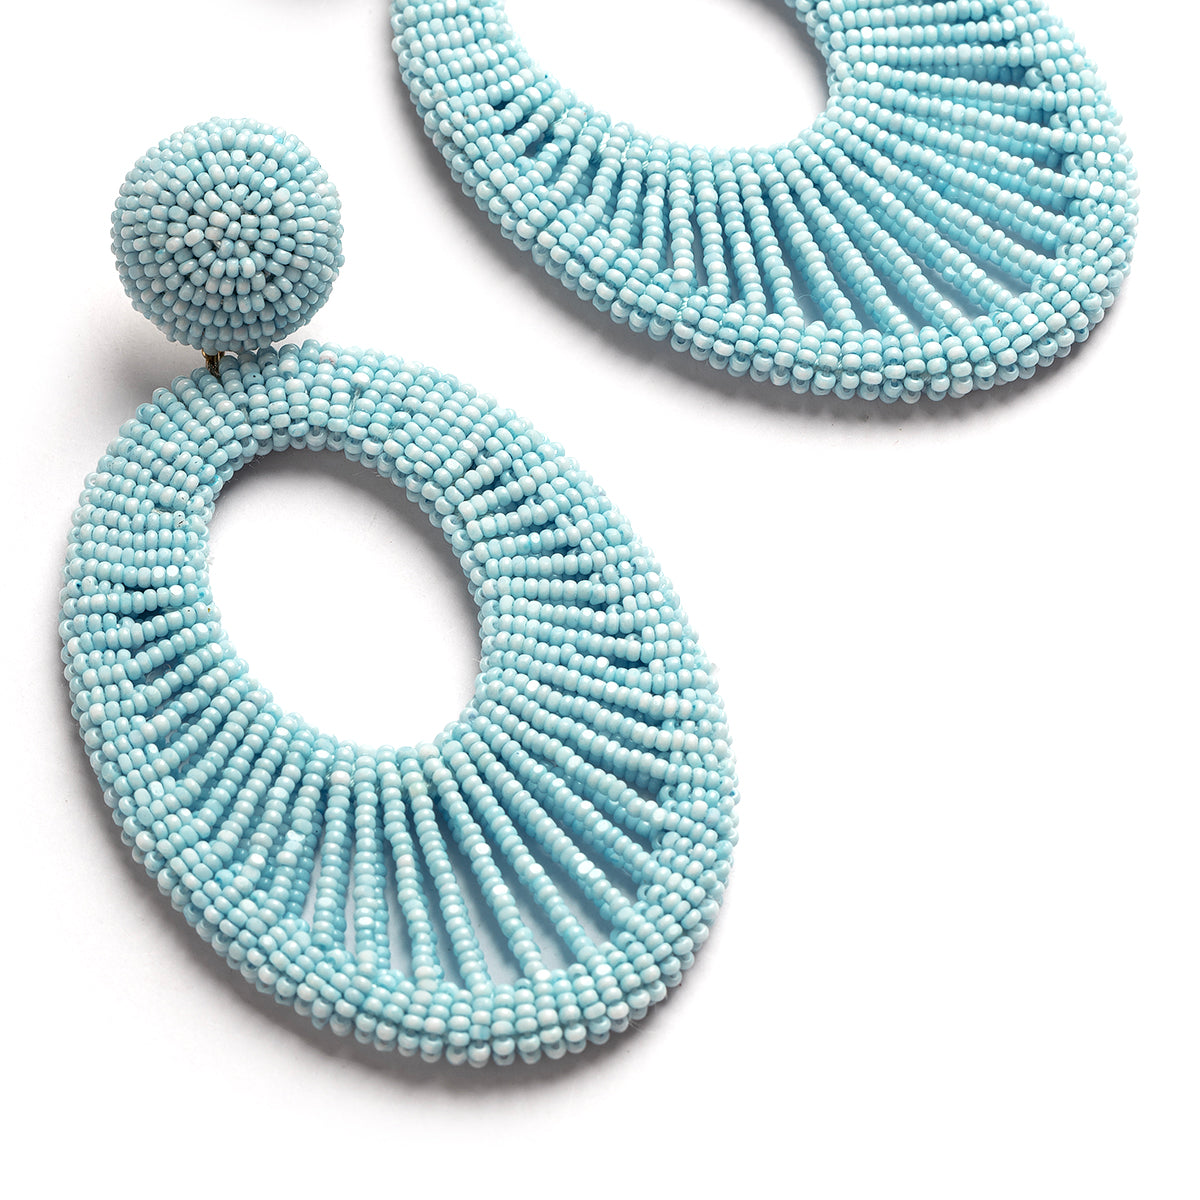 Deepa Gurnani handmade the Cypress earrings in baby blue color